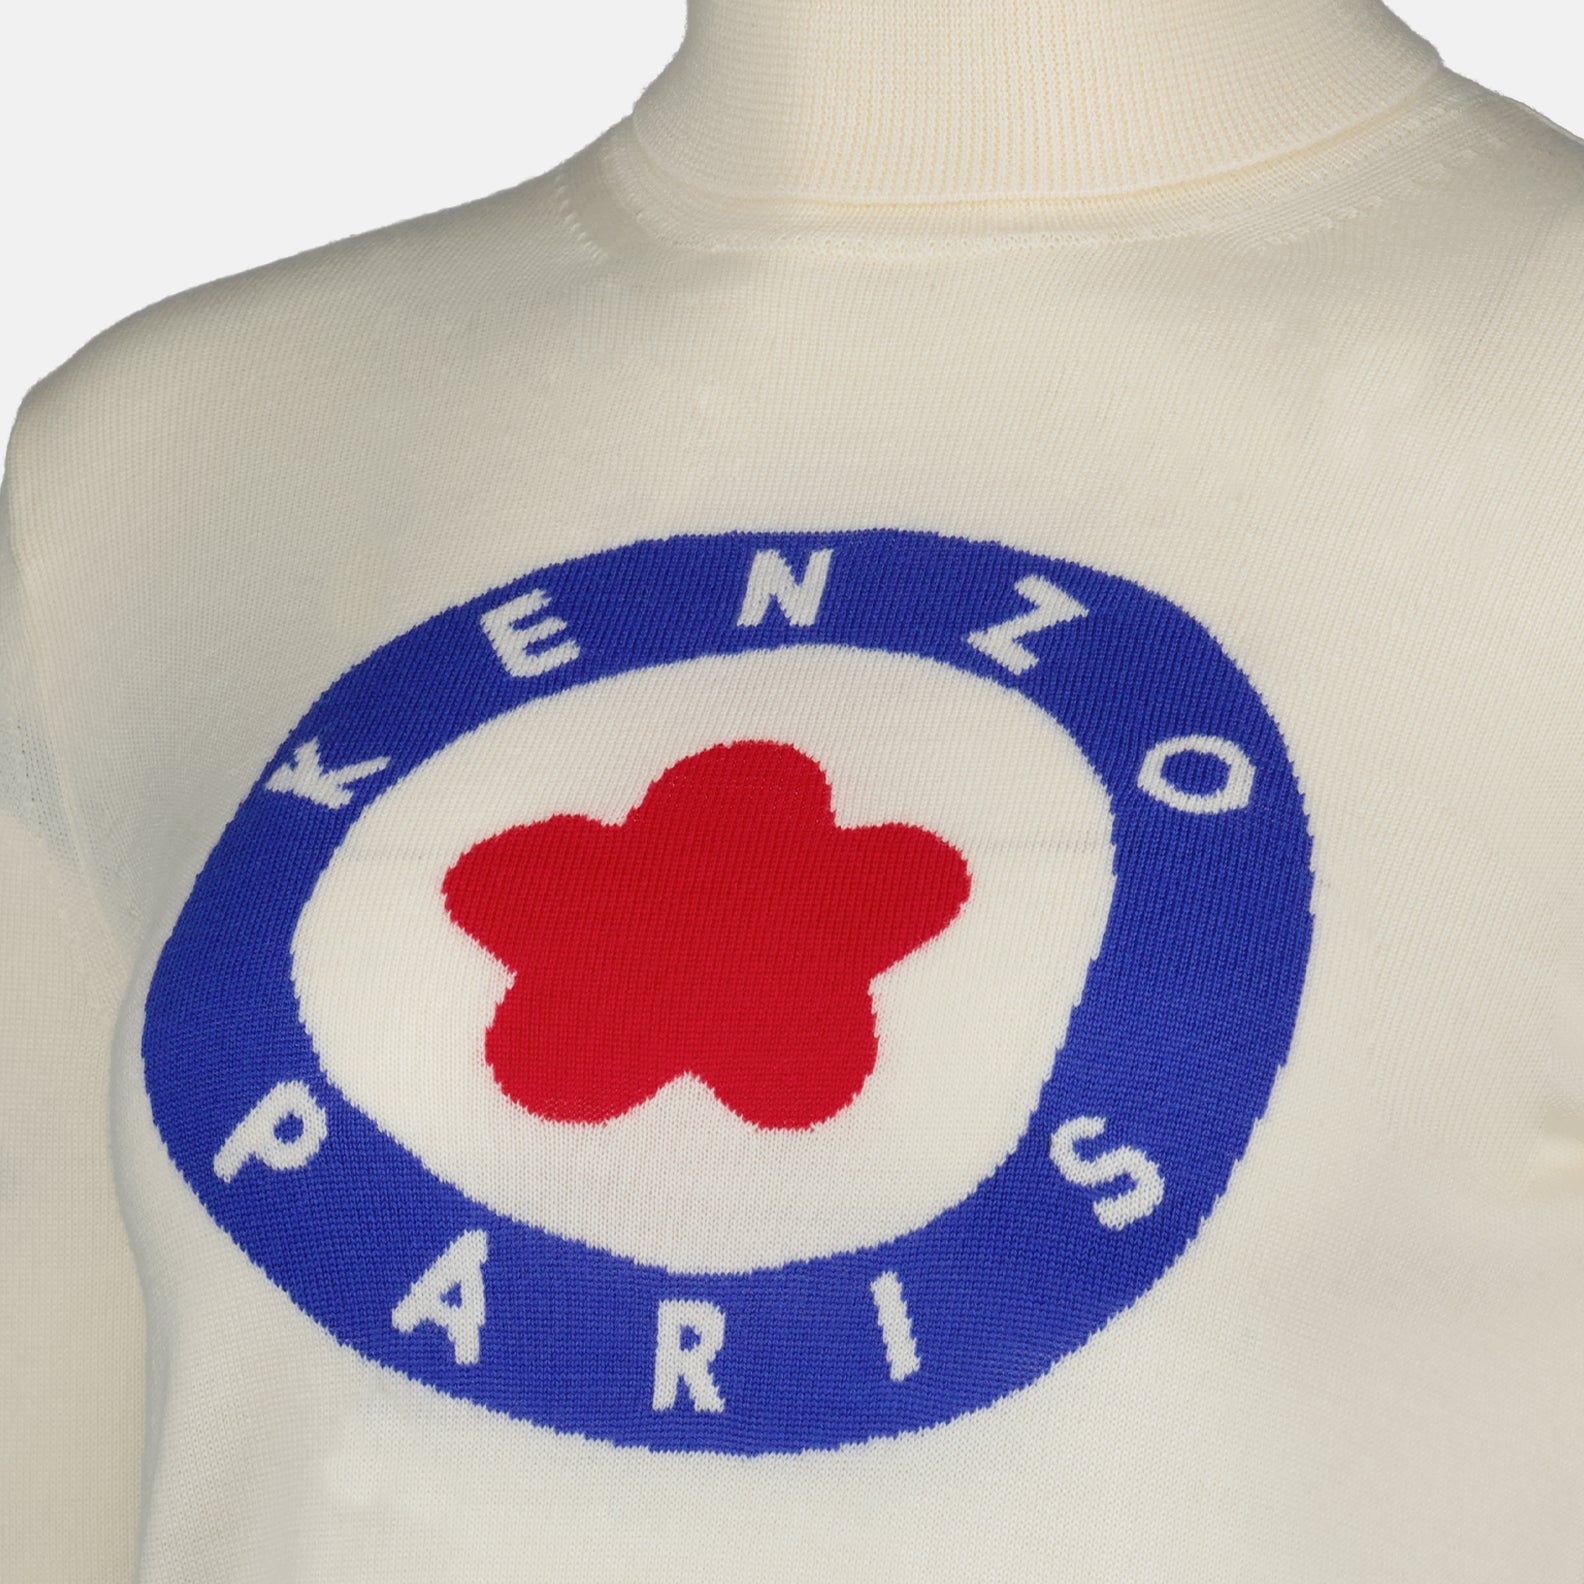 Kenzo Target sweater